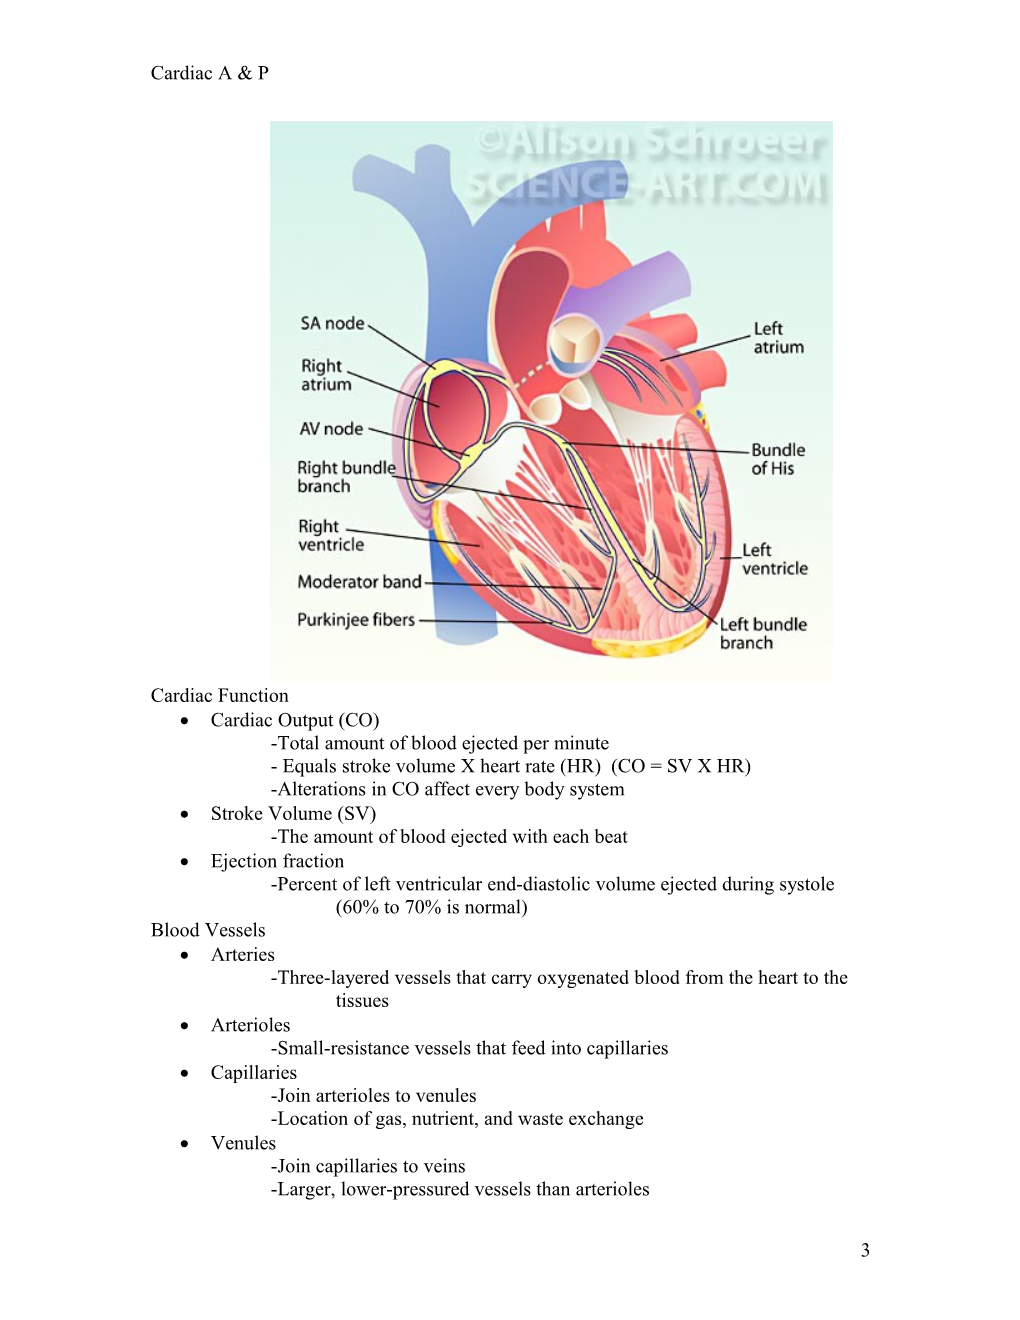 Cardiac Structures